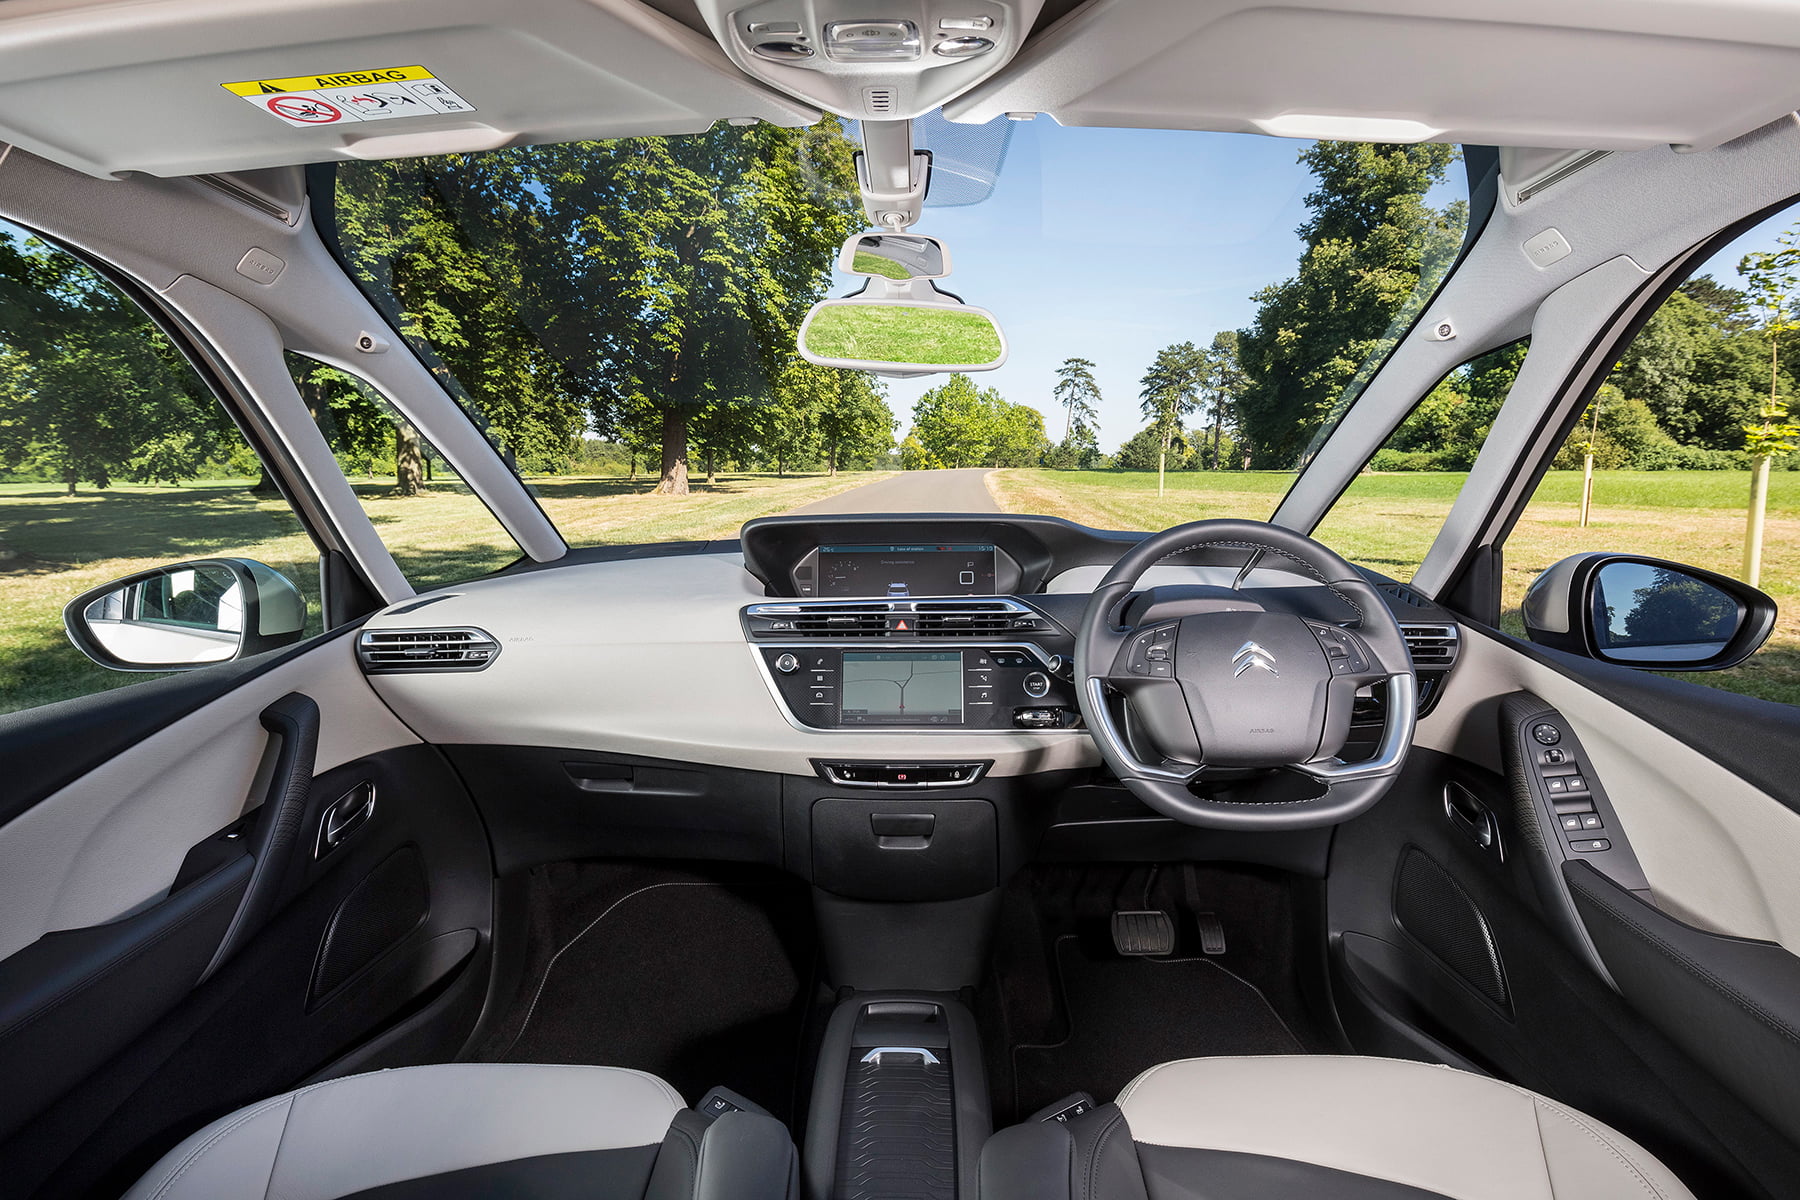 Citroen Grand C4 SpaceTourer (2018 onwards) - interior view